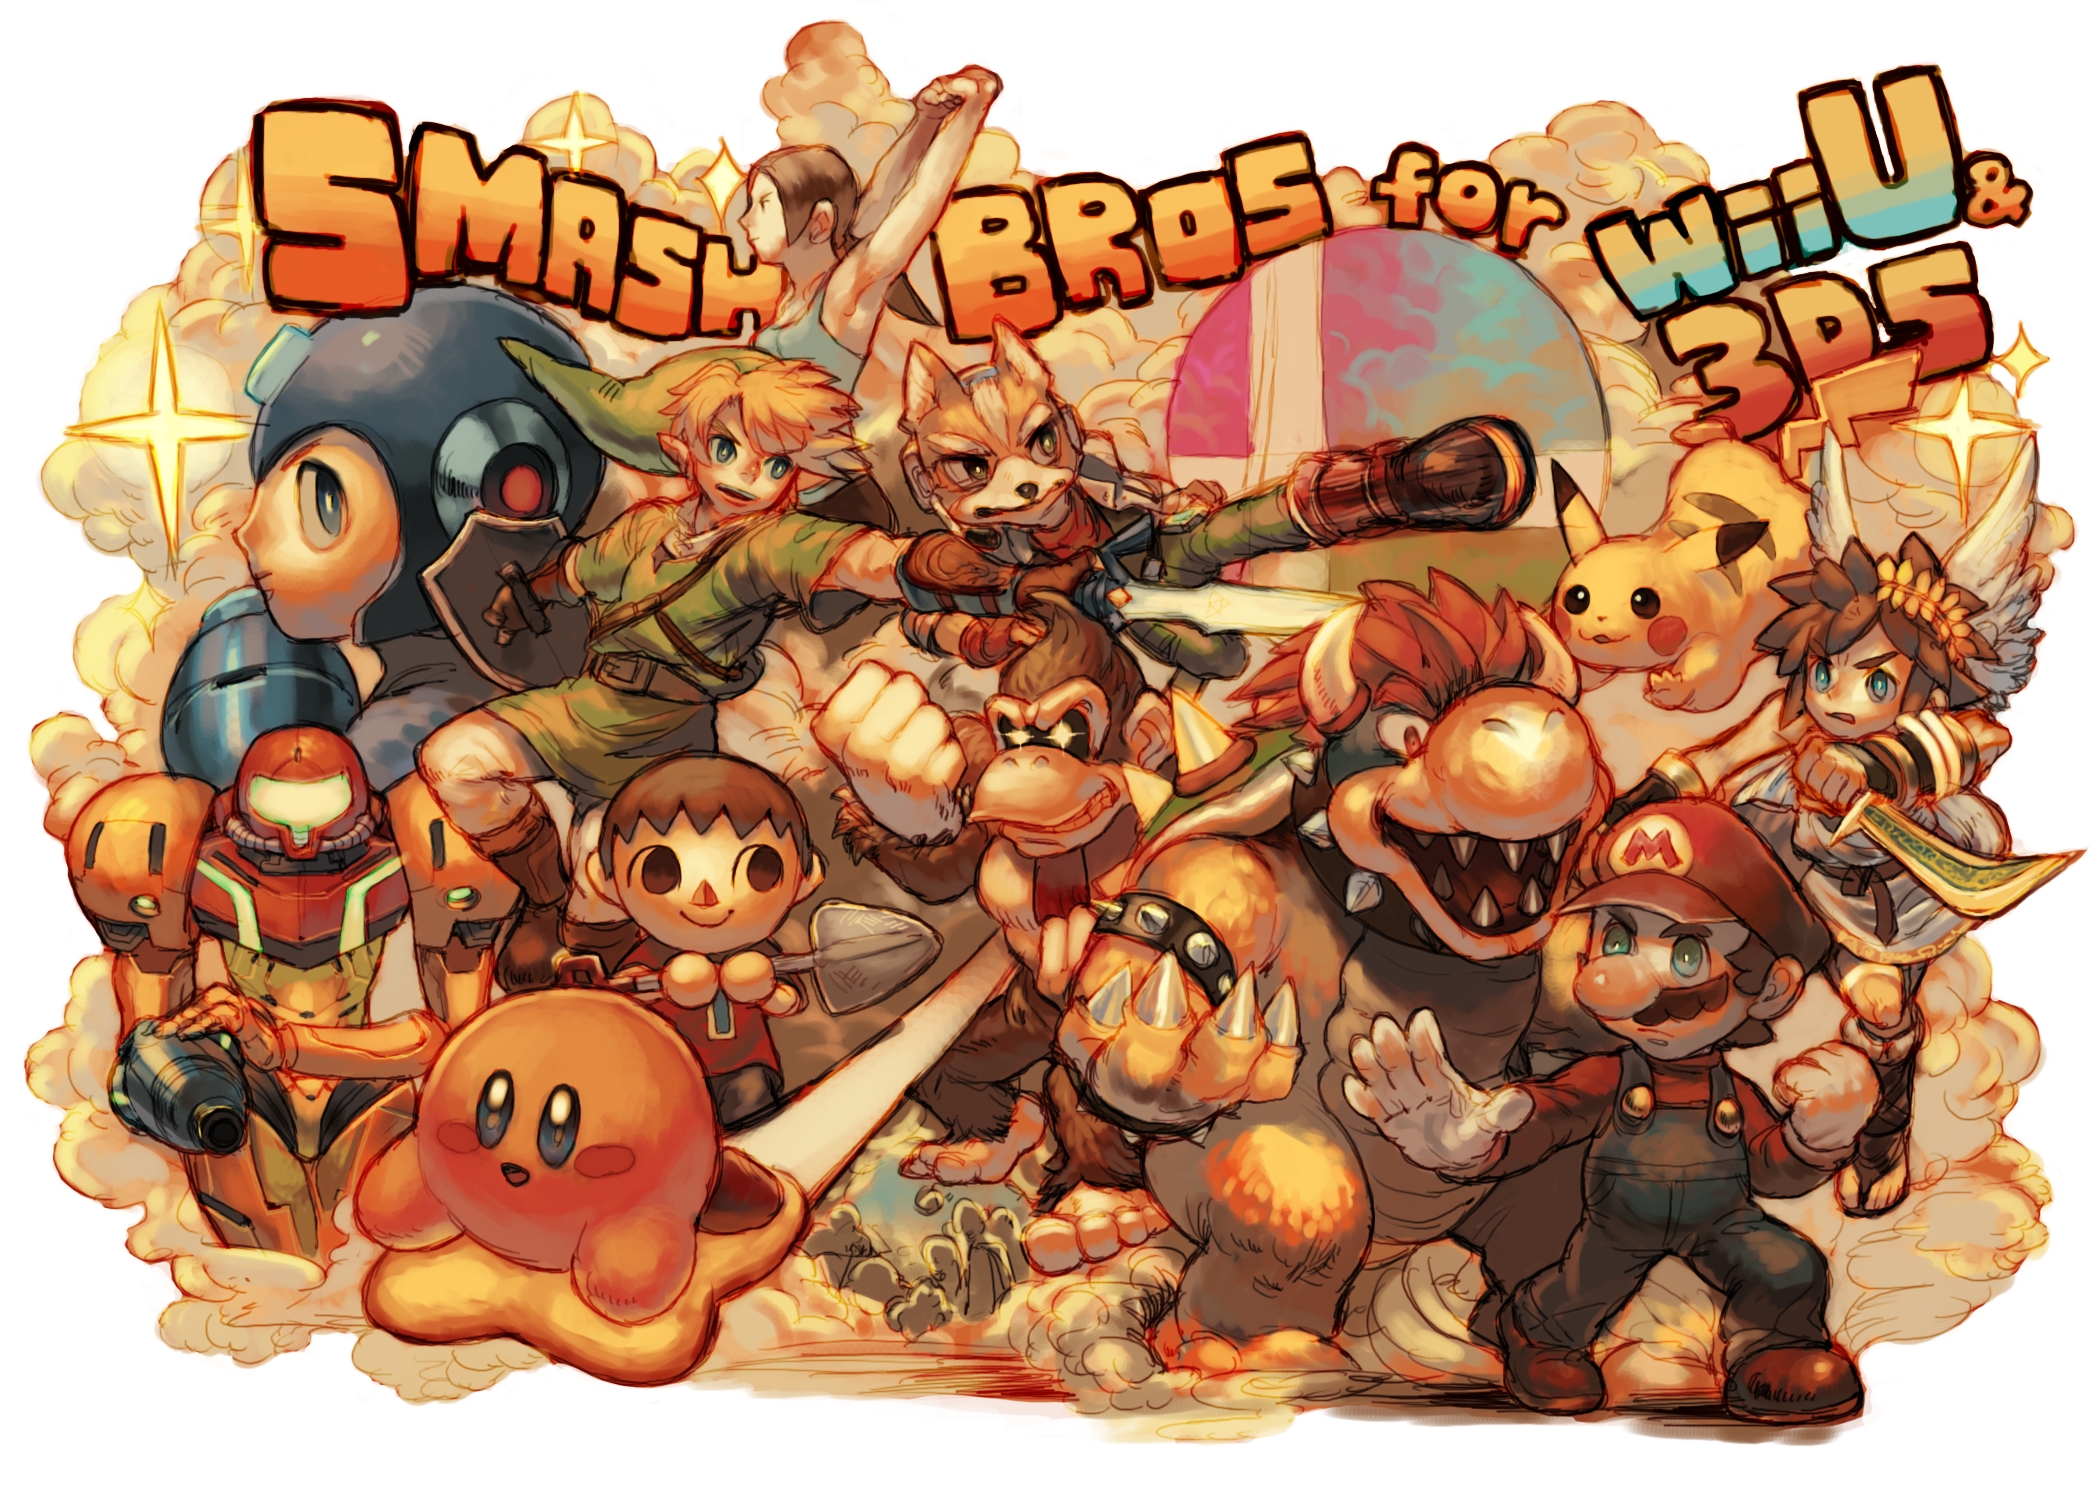 Smash Bros 4 Wallpapers